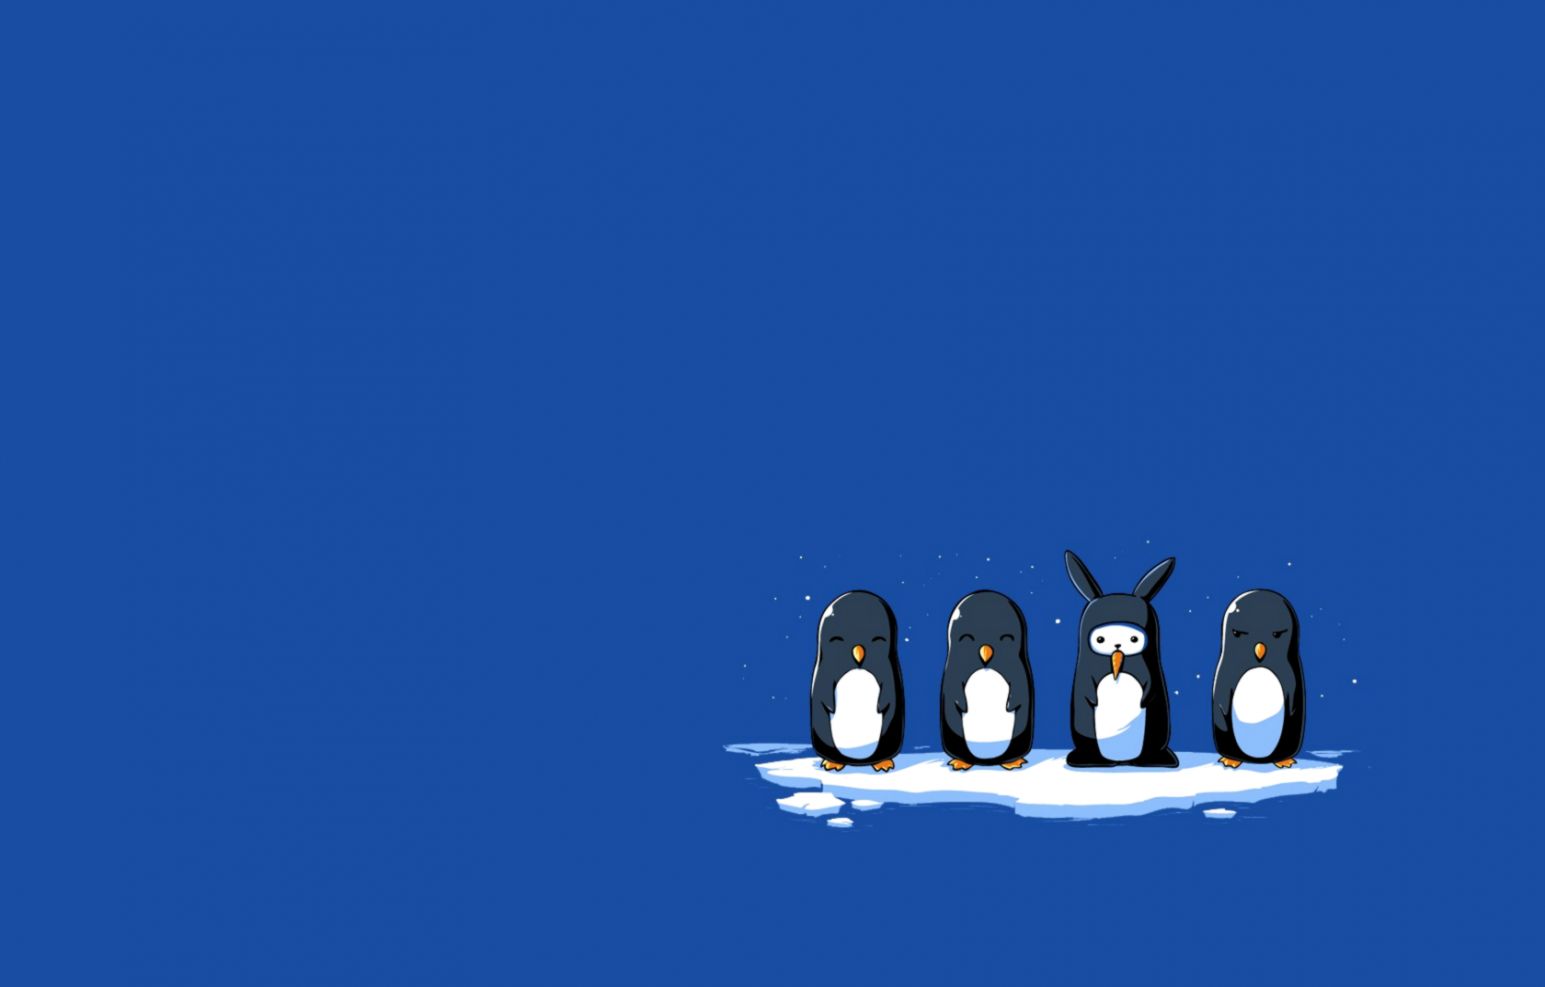 Free download penguins madagascar minimalism cartoon hd wallpaper wallpapers zones x for your desktop mobile tablet explore minimalist penguin wallpaper minimalist backgrounds cute penguin backgrounds penguin wallpaper